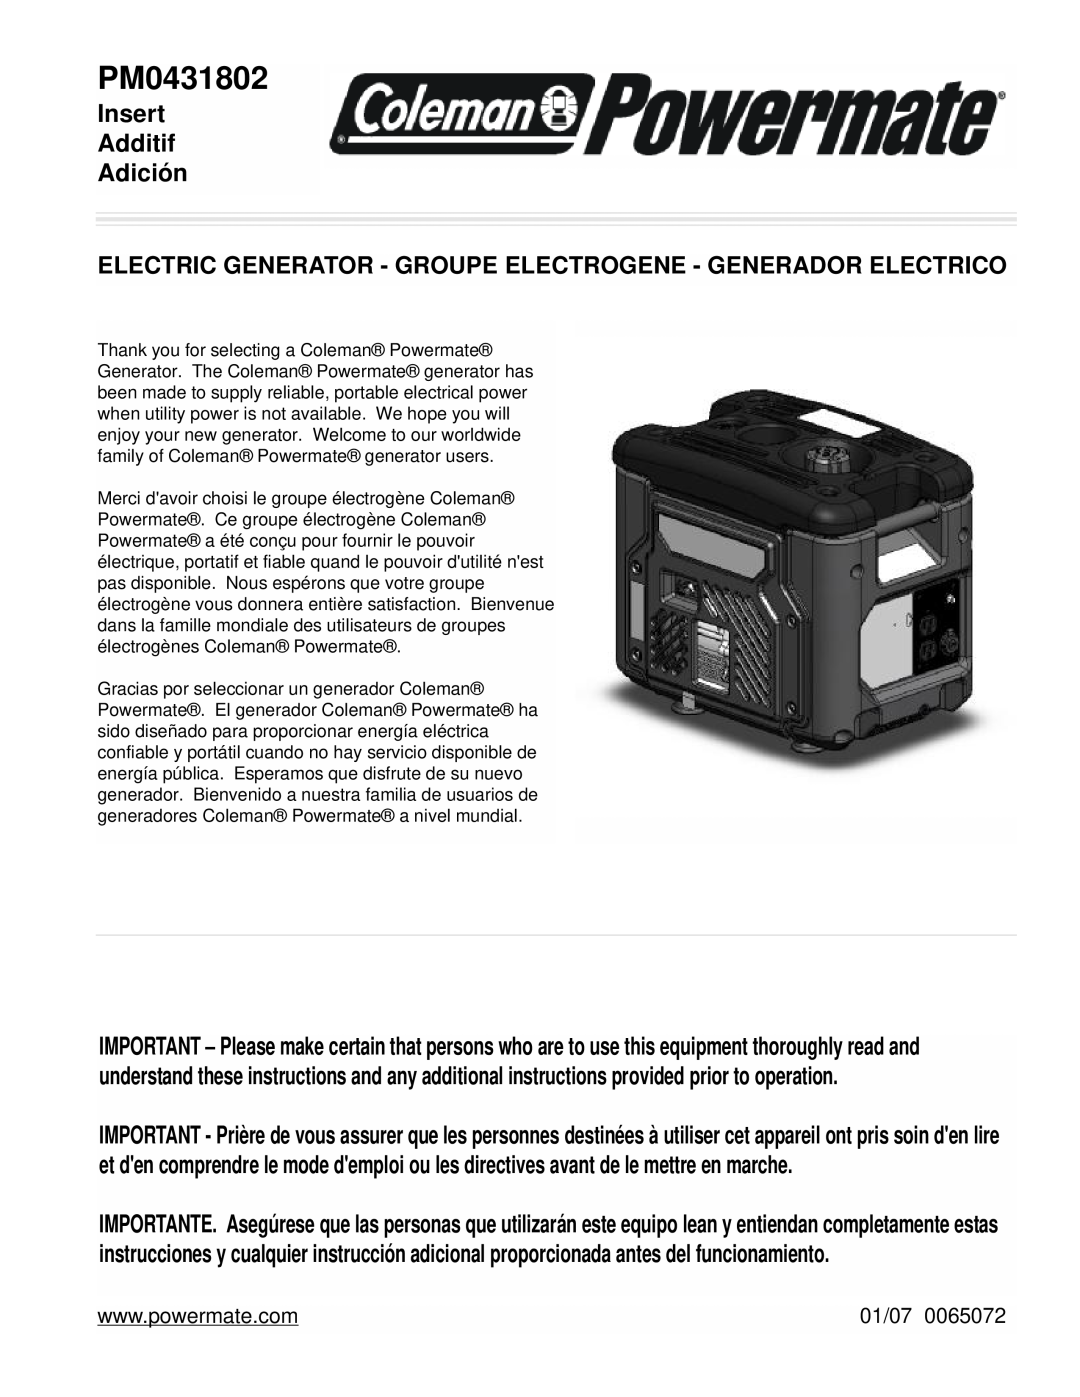 Powermate PM0431802 manual Insert Additif Adición, Electric Generator - Groupe Electrogene - Generador Electrico, 01/07 